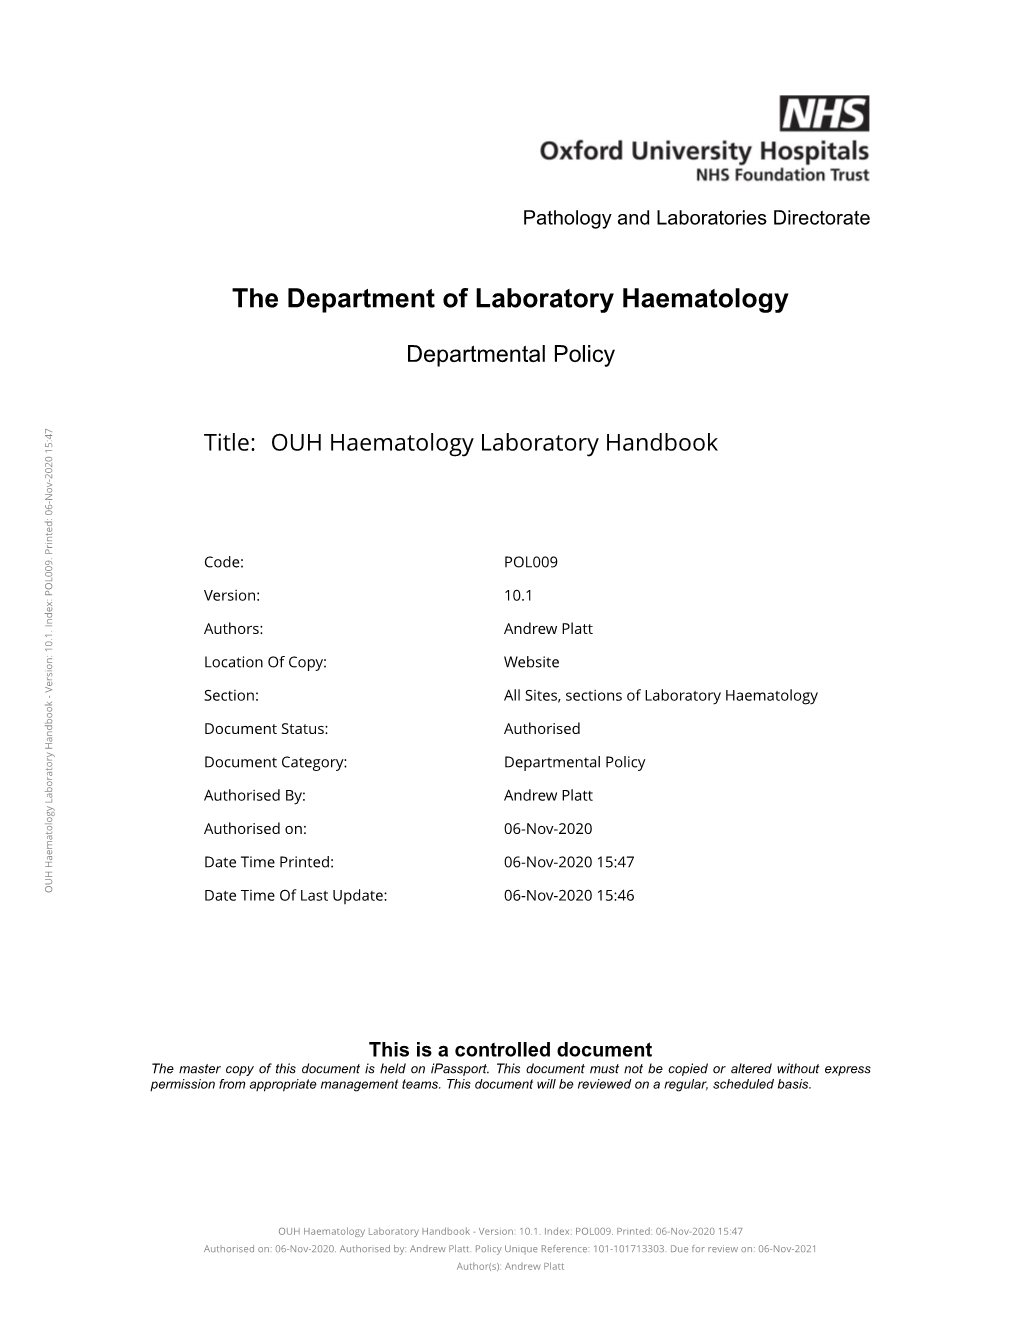 OUH Haematology Laboratory Handbook